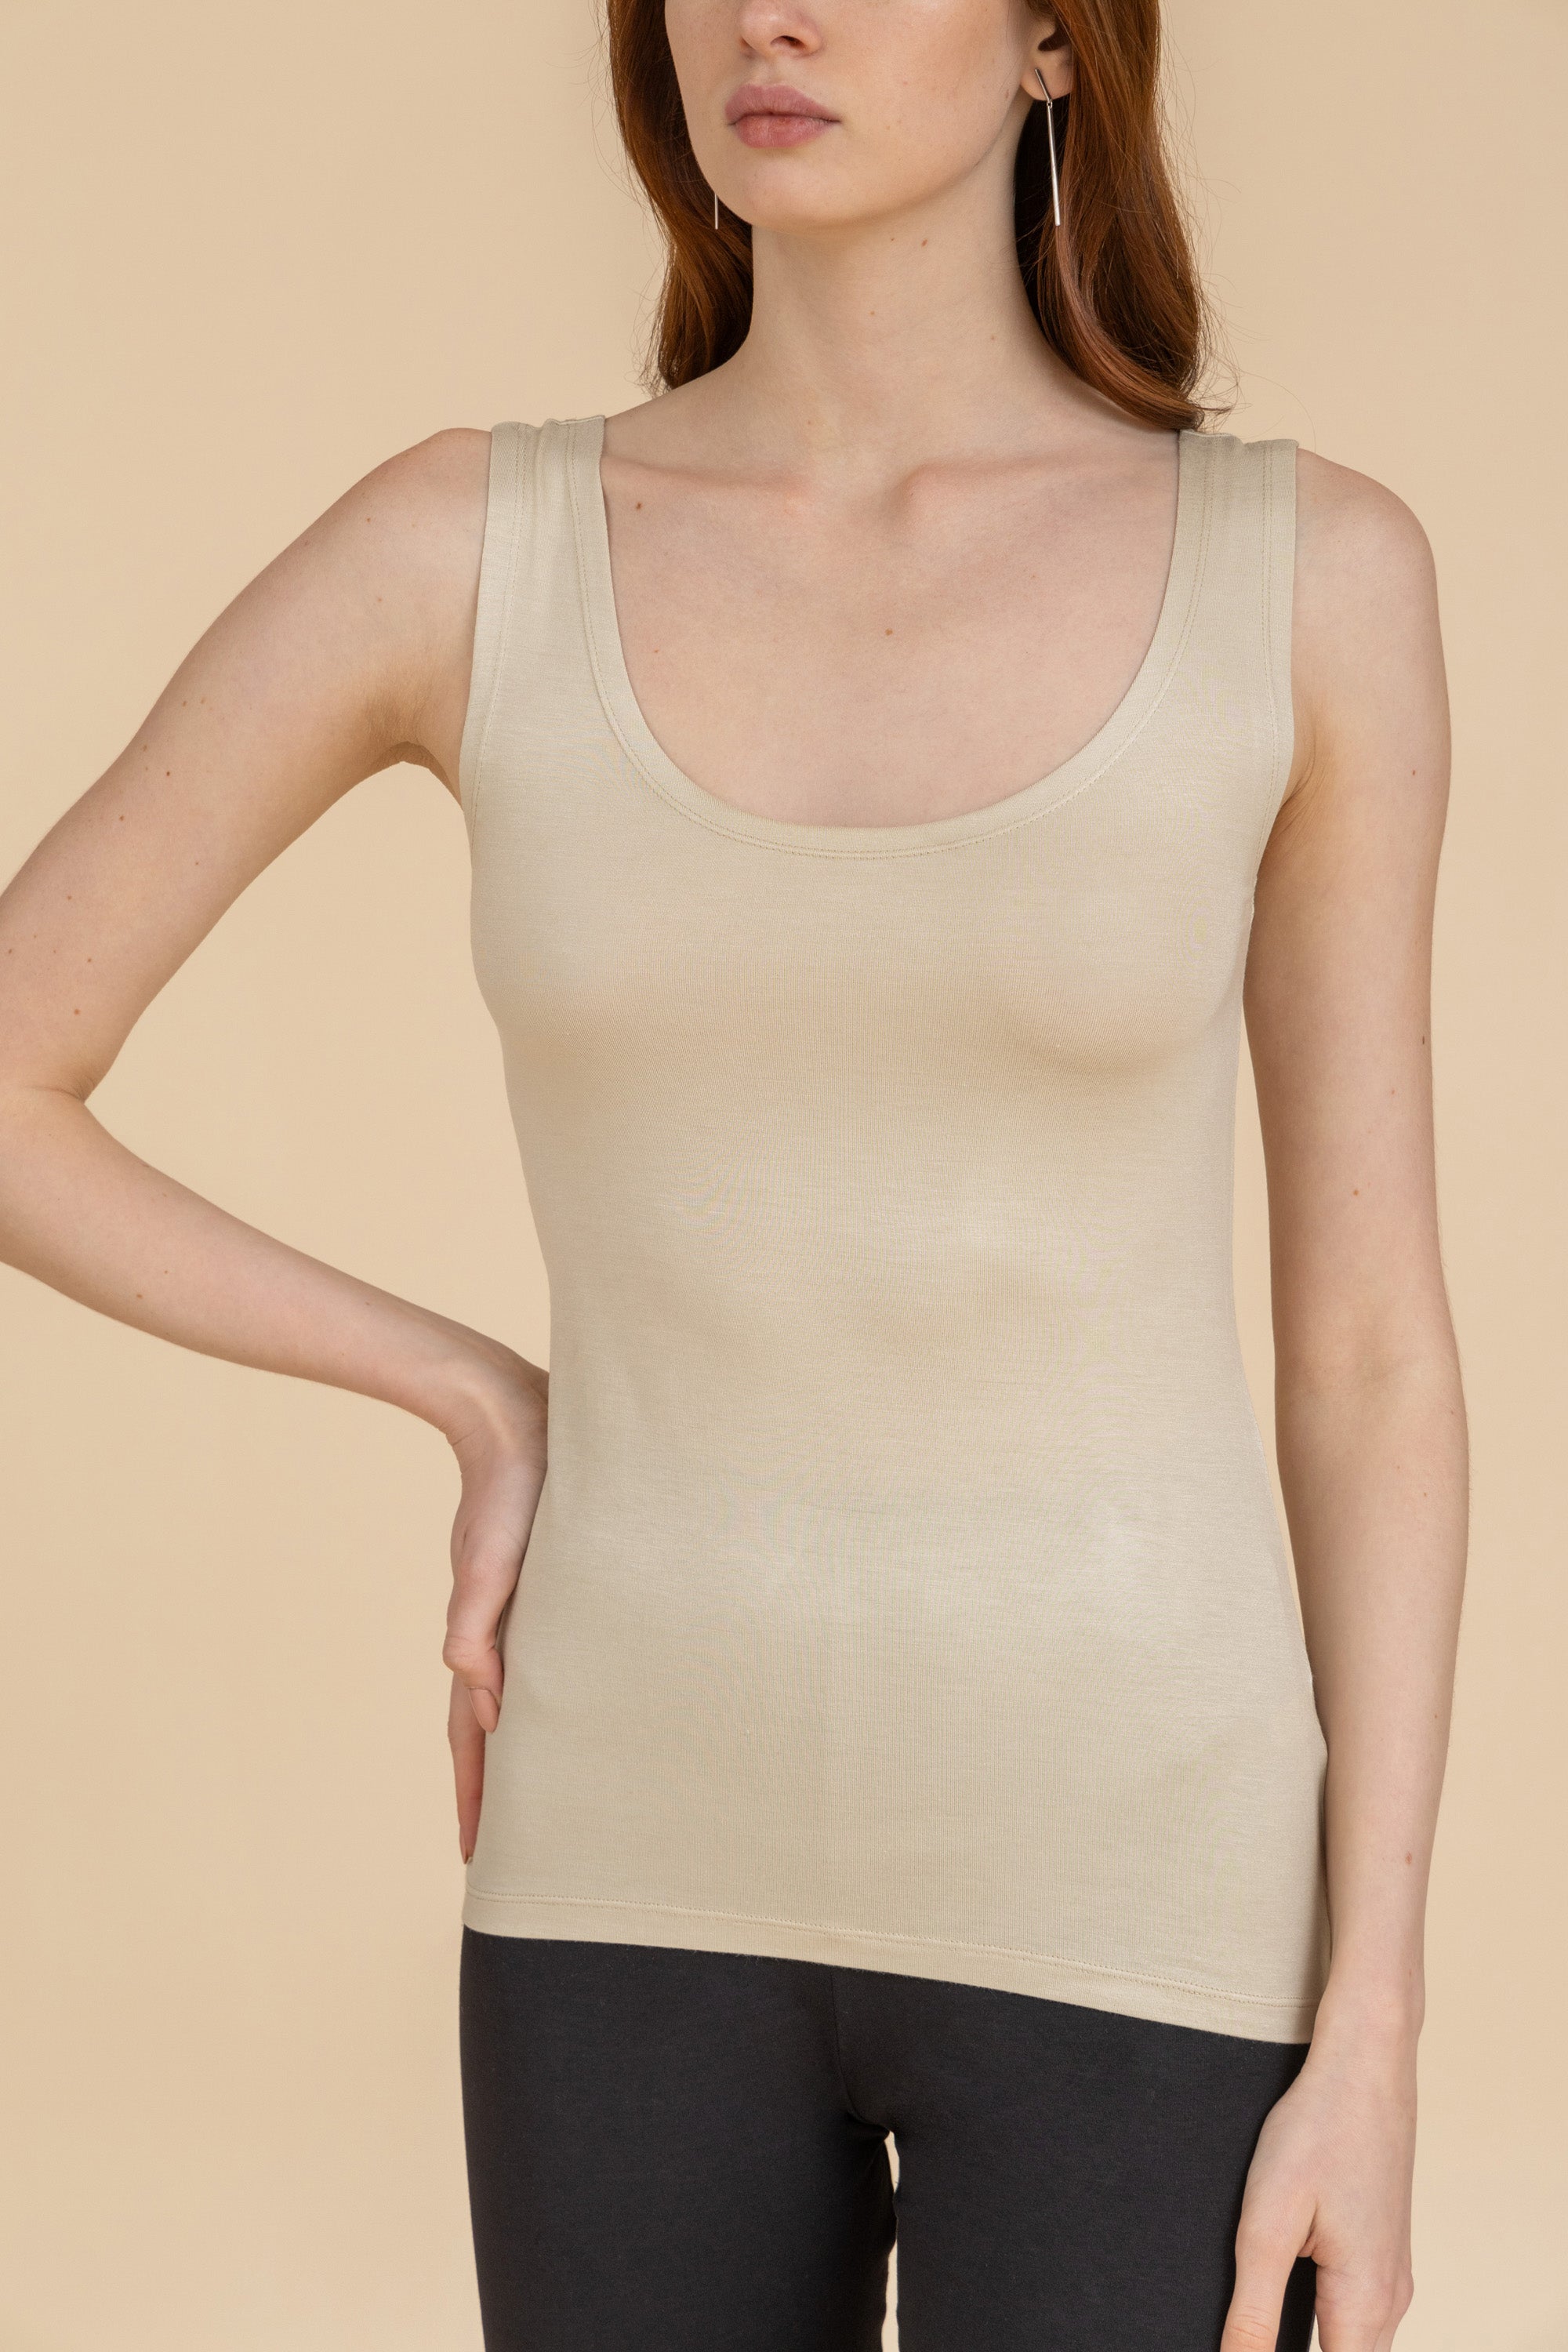 Women's Wide Strap Viscose Tank Top Undershirt